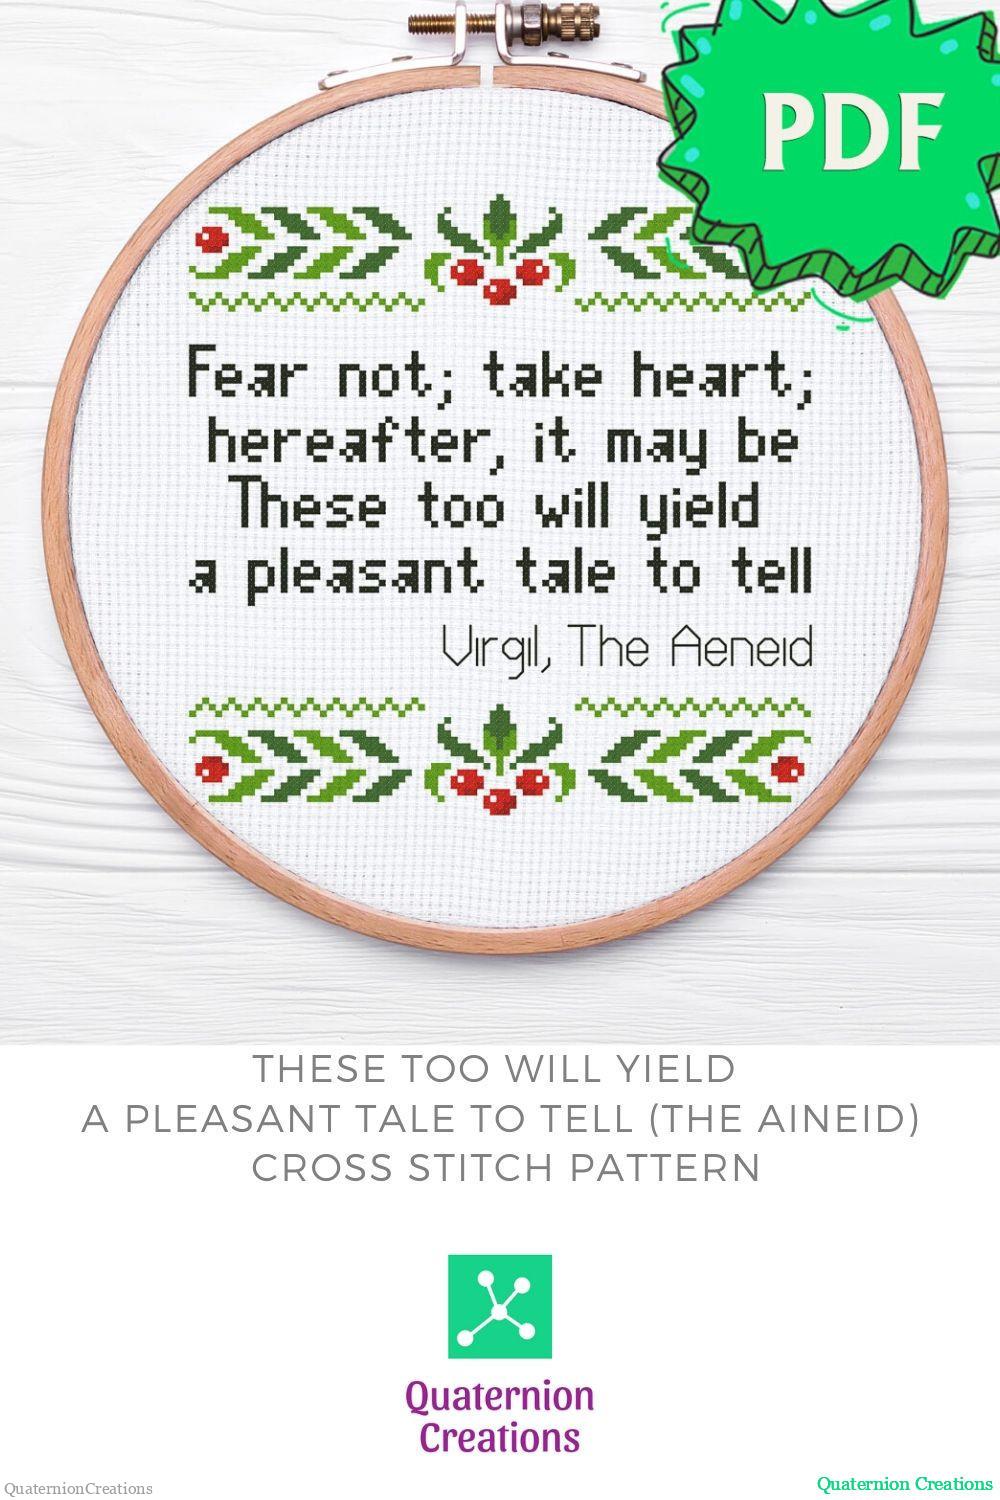 Fear not; take heart - The Aeneid - Virgil quote motivational cross stitch pattern - modern cross stitch design